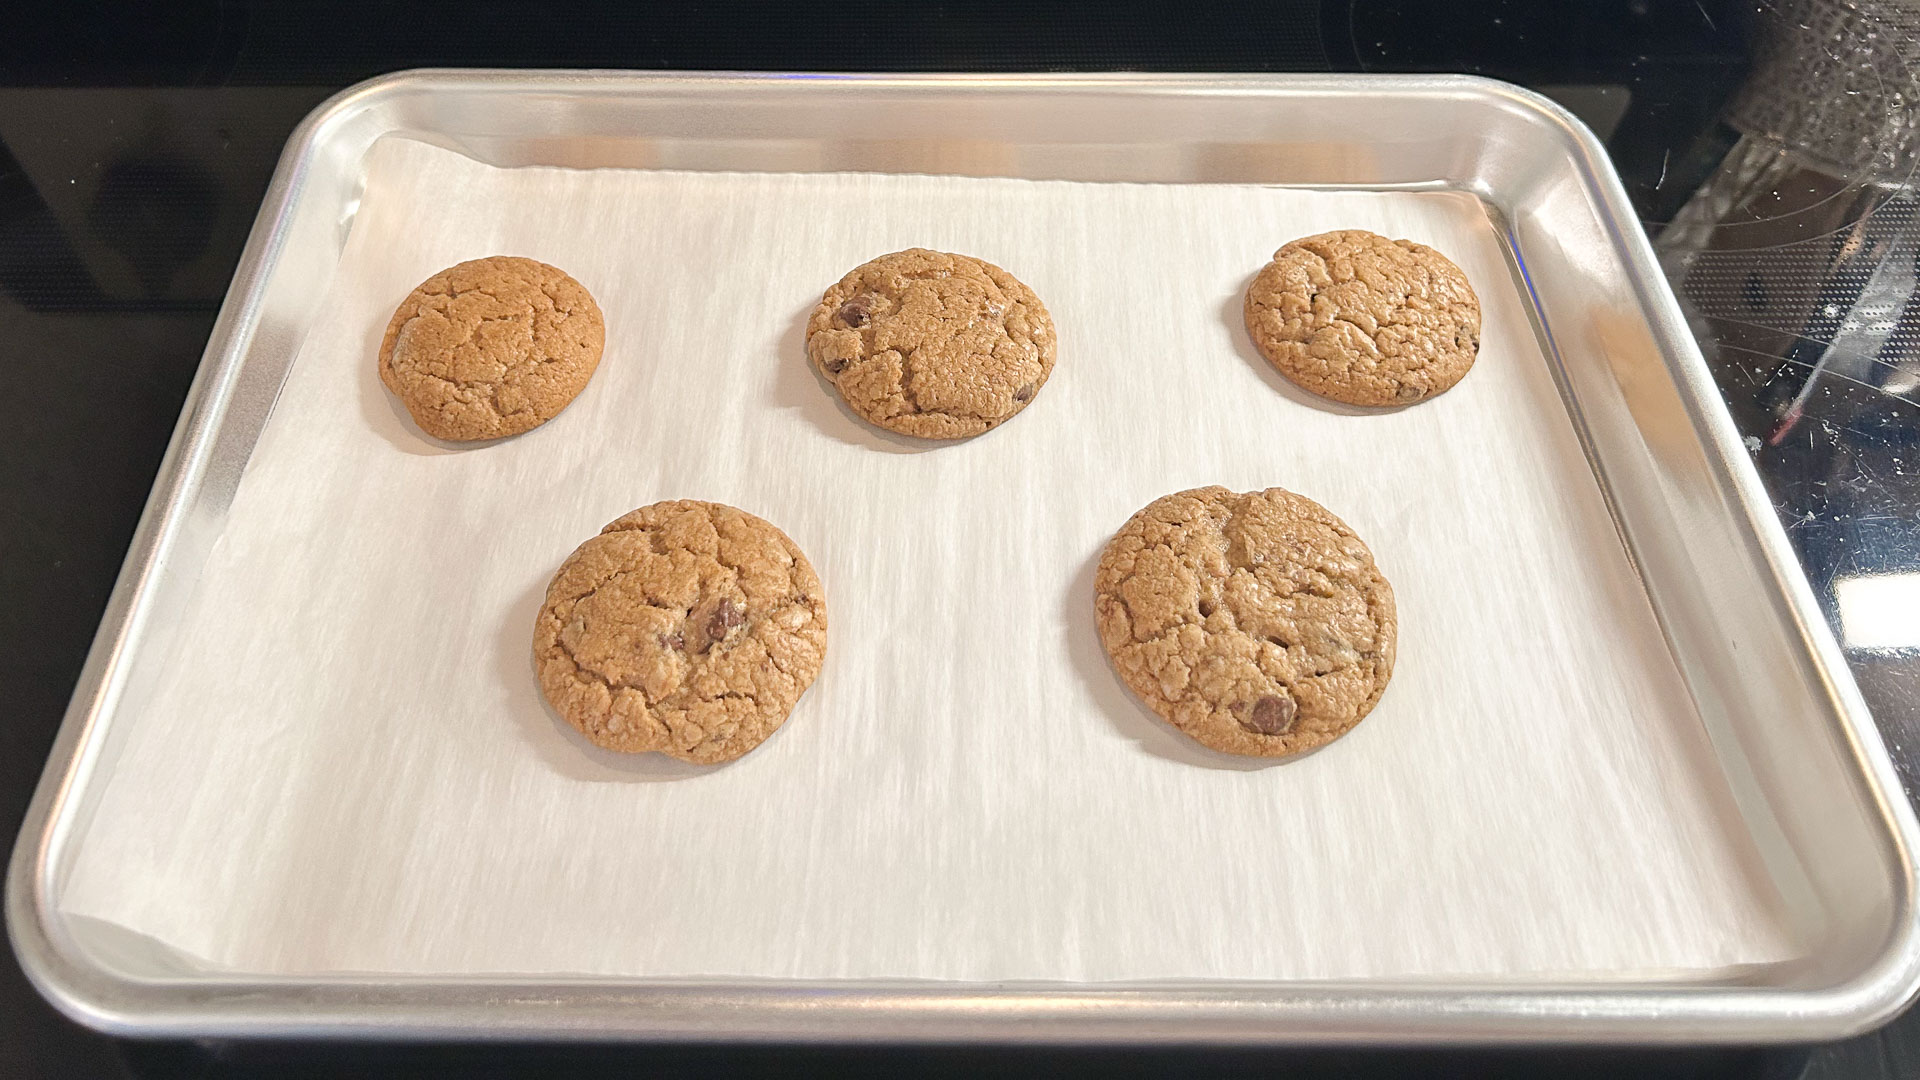 https://www.dontwasteyourmoney.com/wp-content/uploads/2023/05/cookie-sheet-nordic-ware-rust-resistant-aluminum-cookie-sheets-3-piece-baked-review-ub-1.jpg